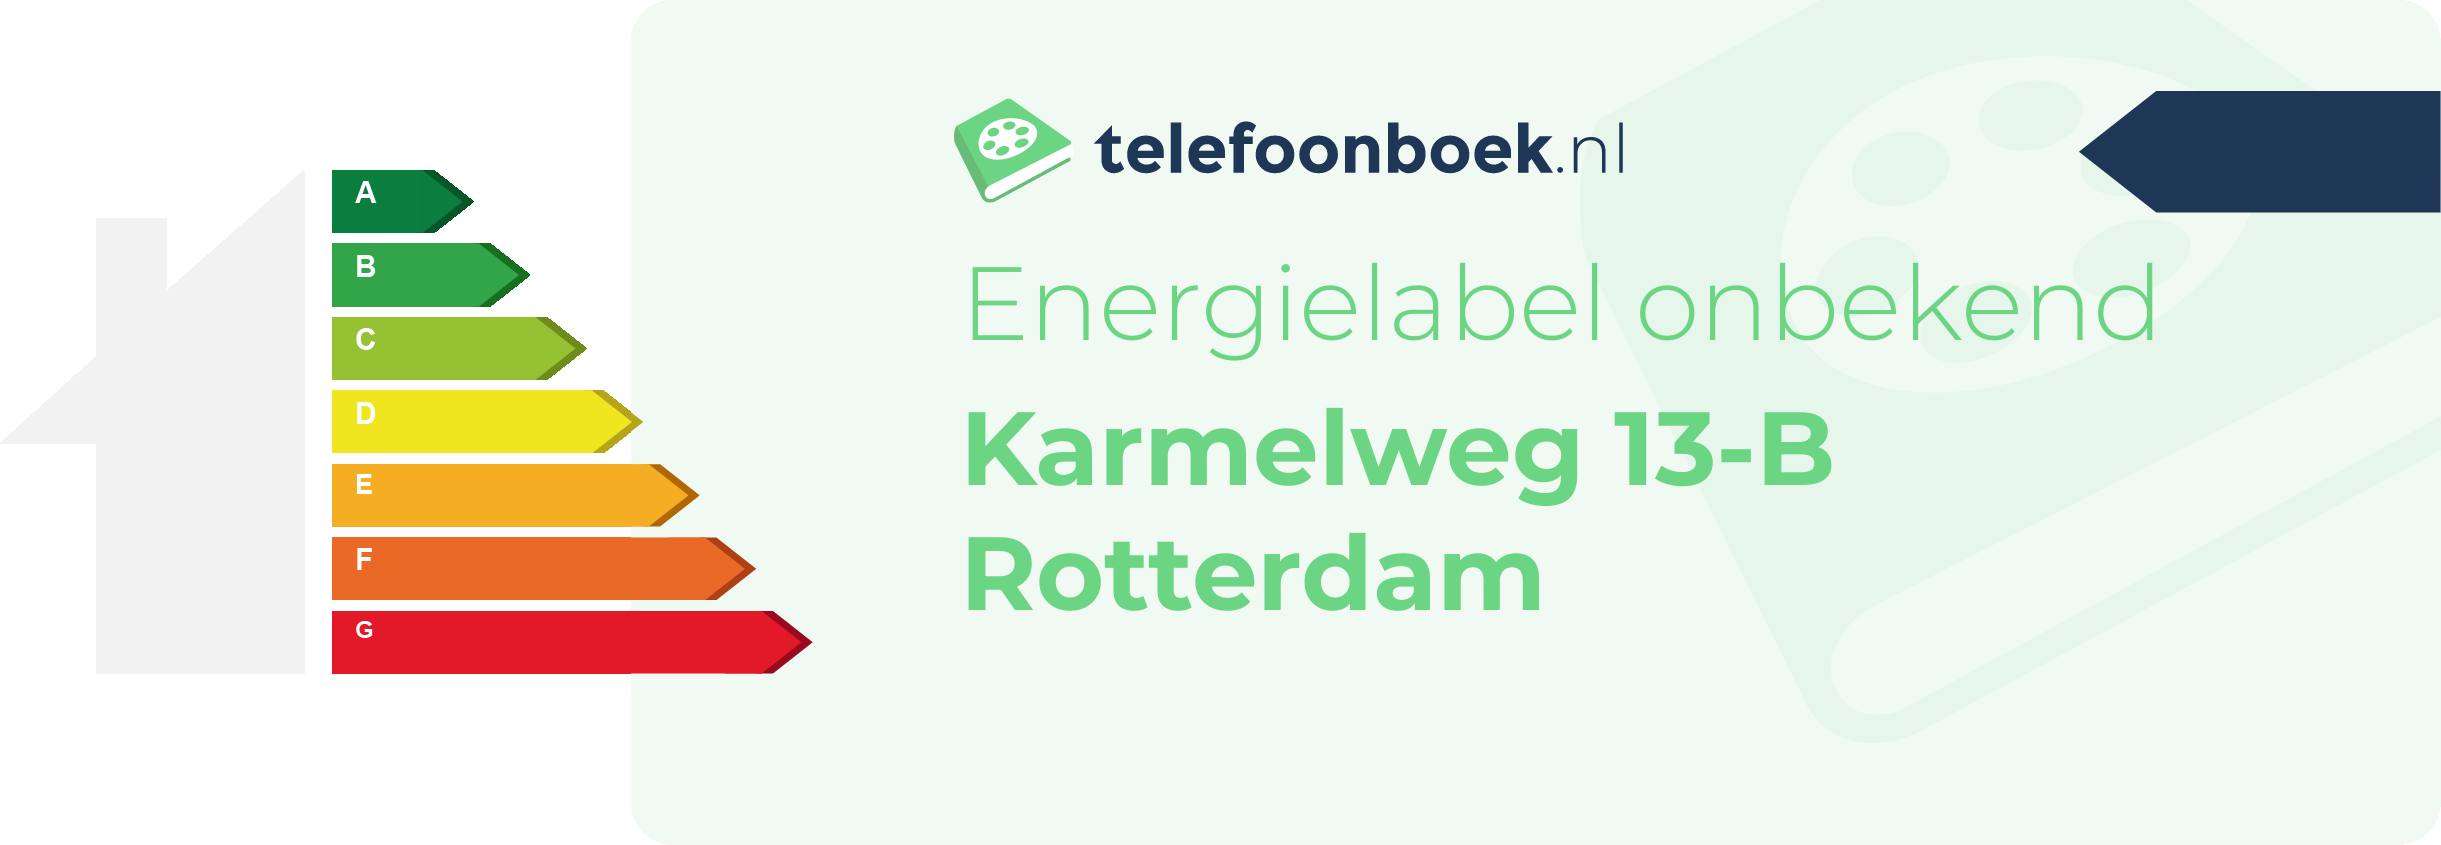 Energielabel Karmelweg 13-B Rotterdam